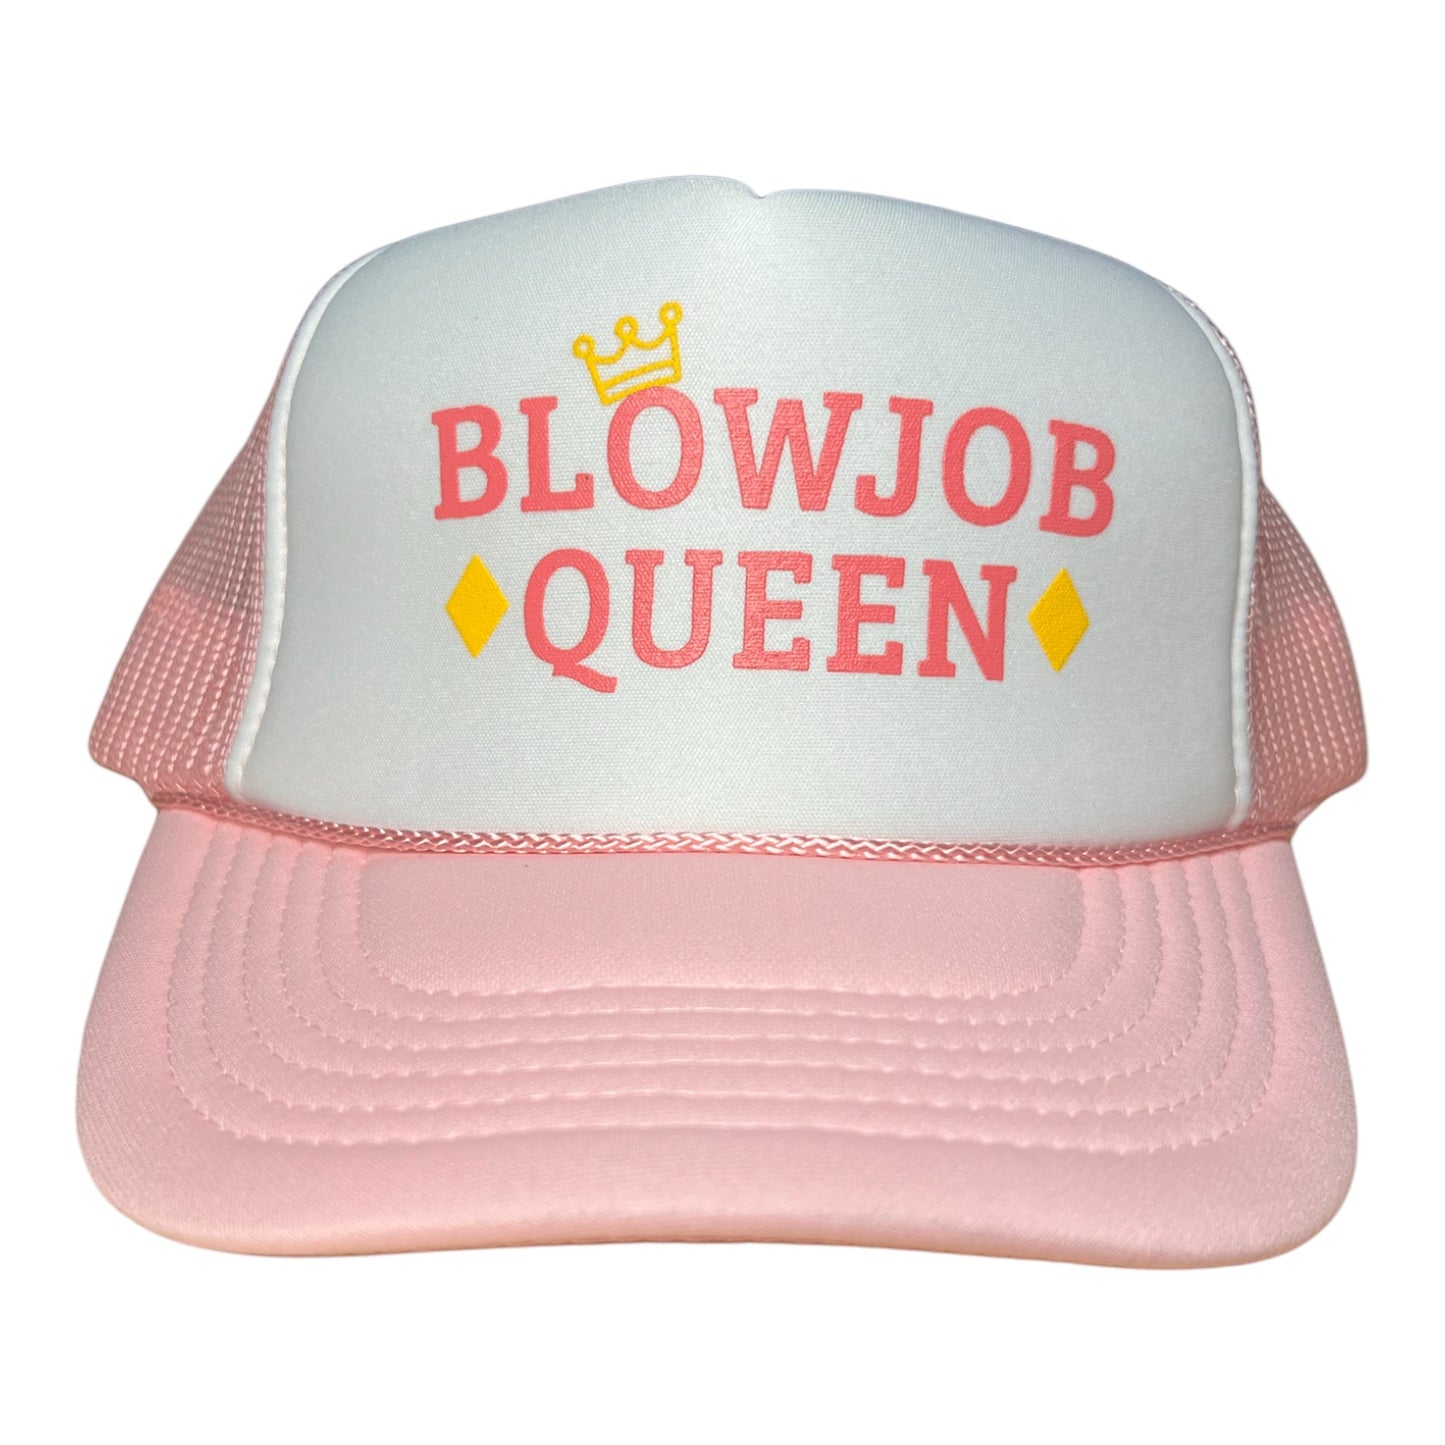 Blowjob Queen Trucker Hat Funny Trucker Hat Pink/White